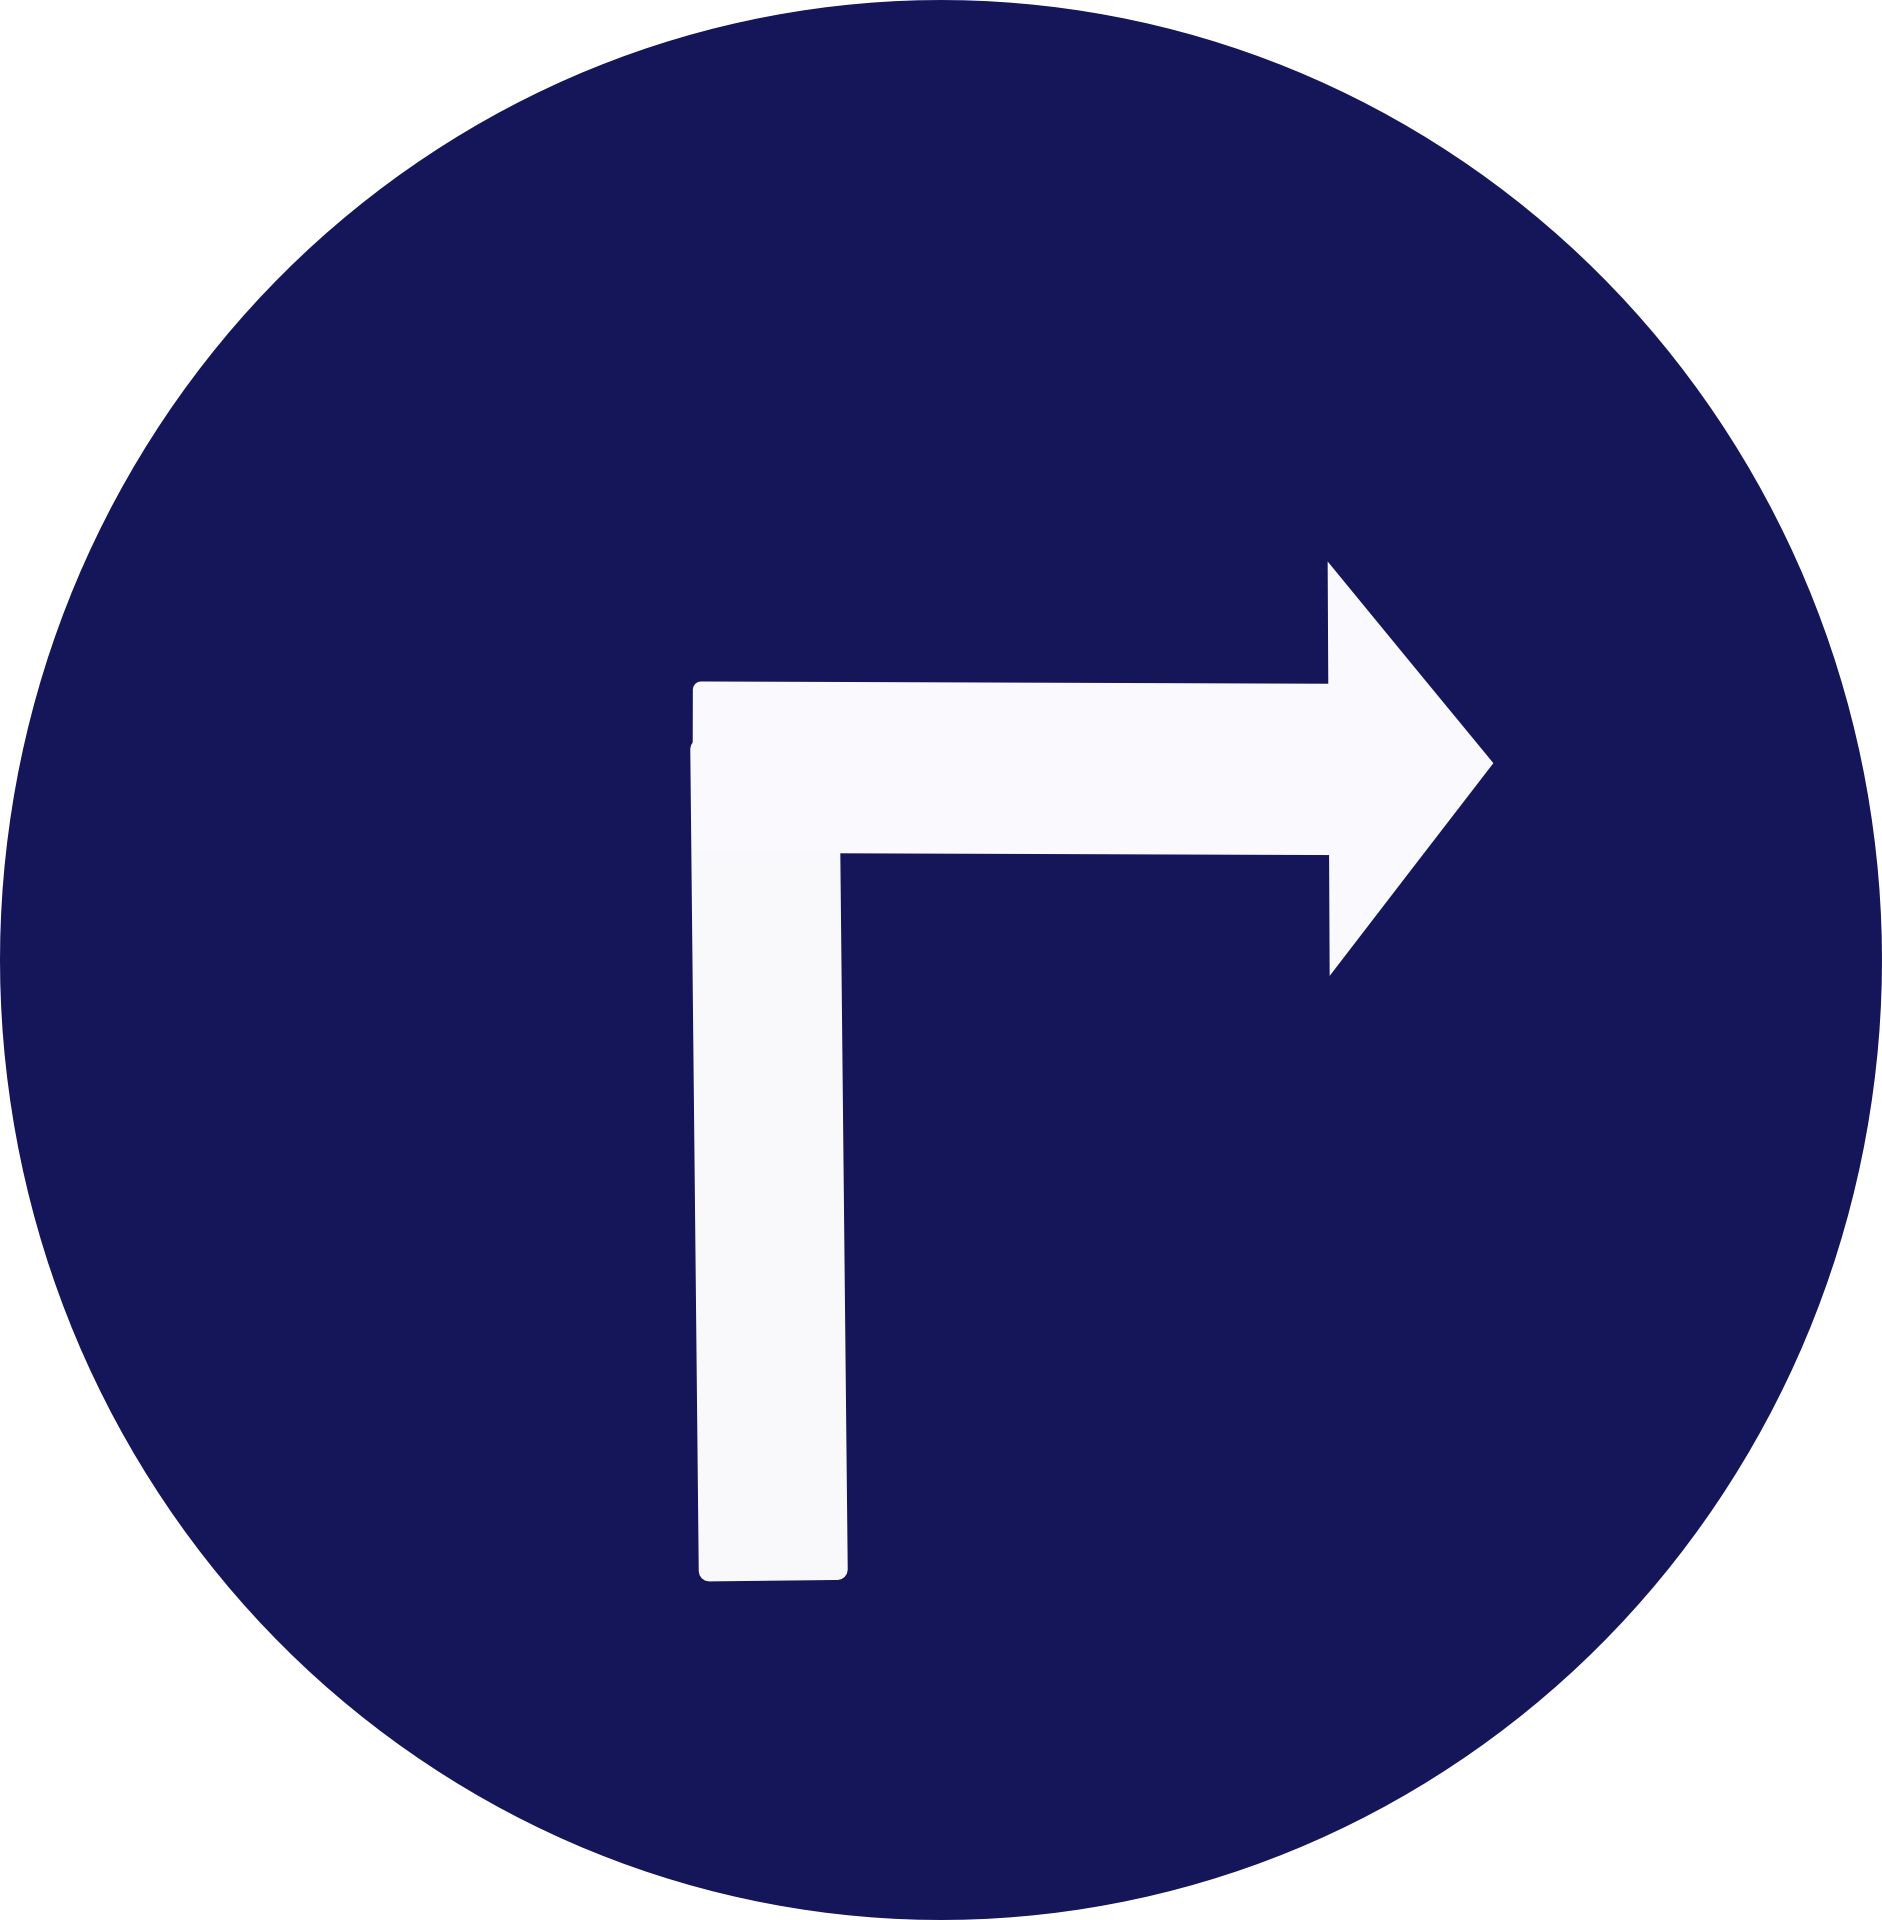 Знак повернуть на право. Знак поворот. Поворот направо. Дорожный знак поворот направо. Табличка поворот направо.